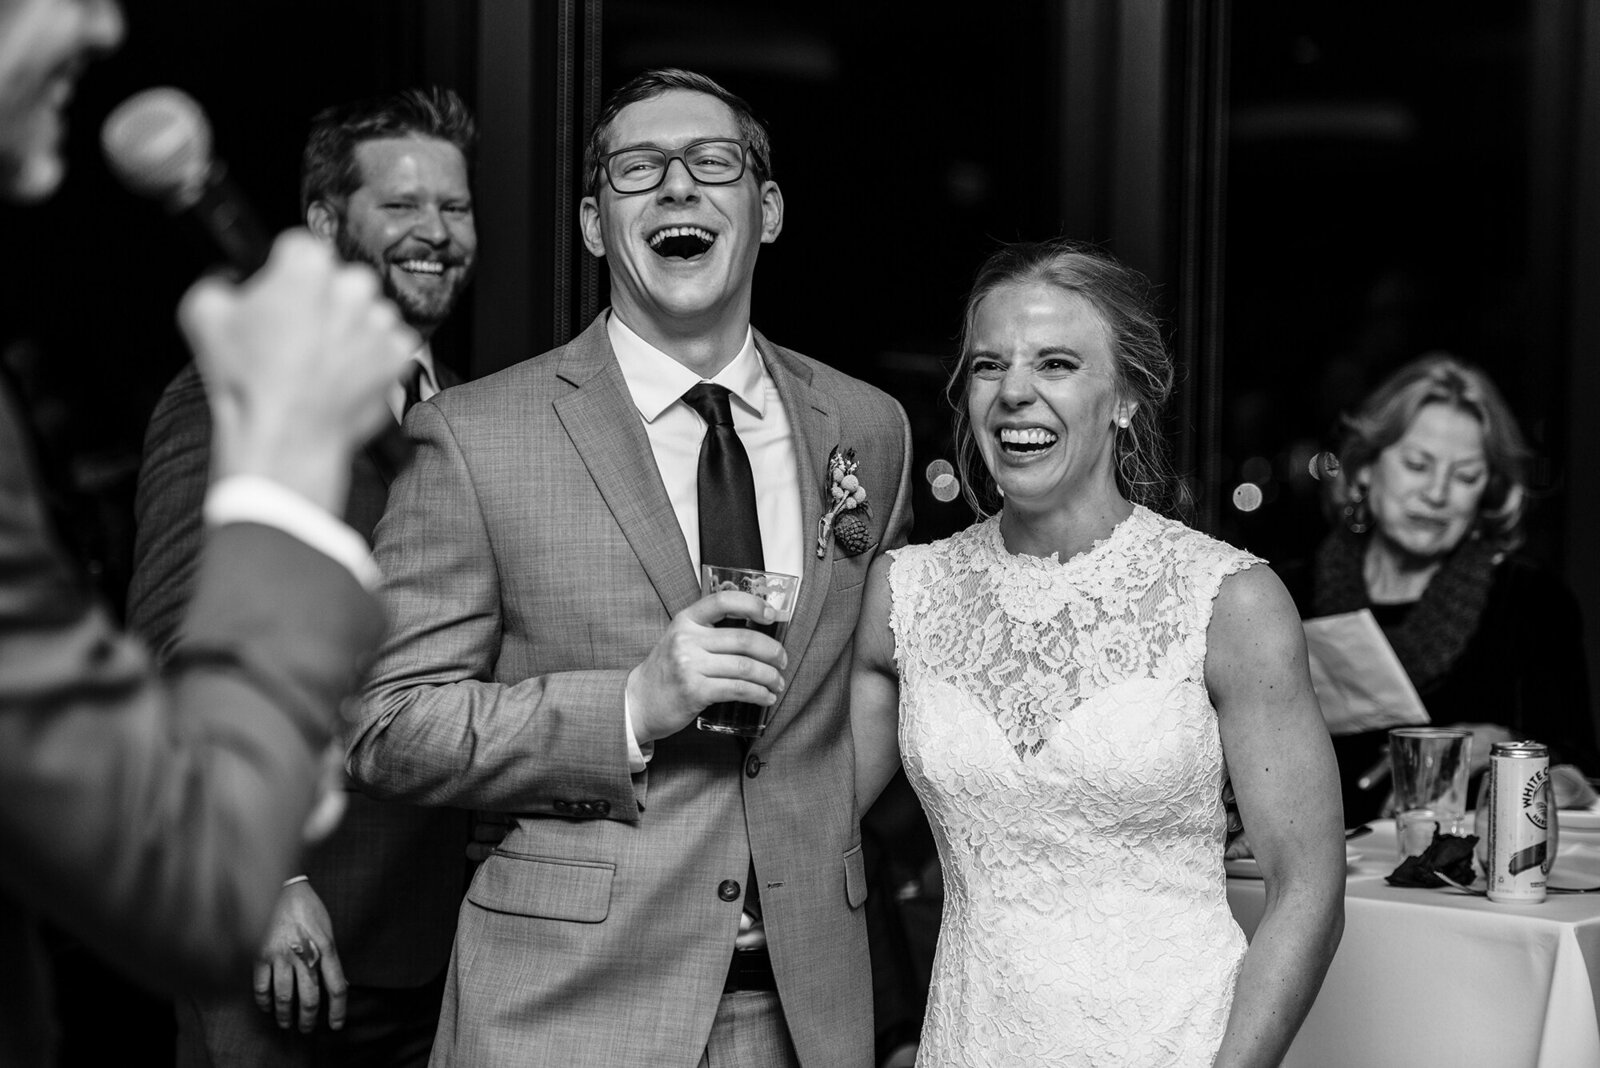 Christina & Matt - Minnesota Wedding Photography - Brookview Golf Club - Golden Valley - RKH Images - Reception (230 of 308)